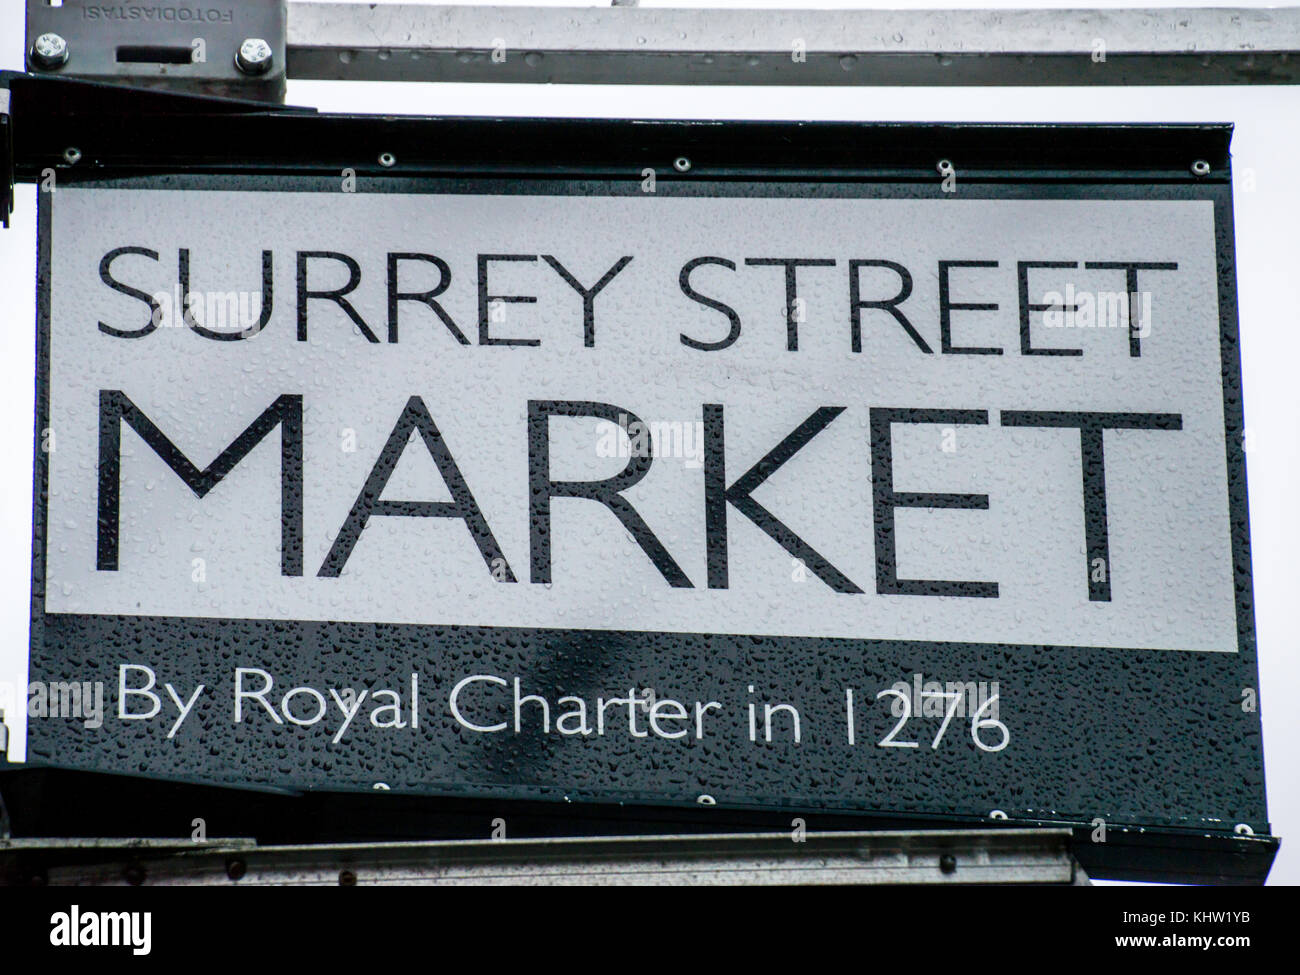 Surrey Street Market by Royal Charter nel 1276 Foto Stock